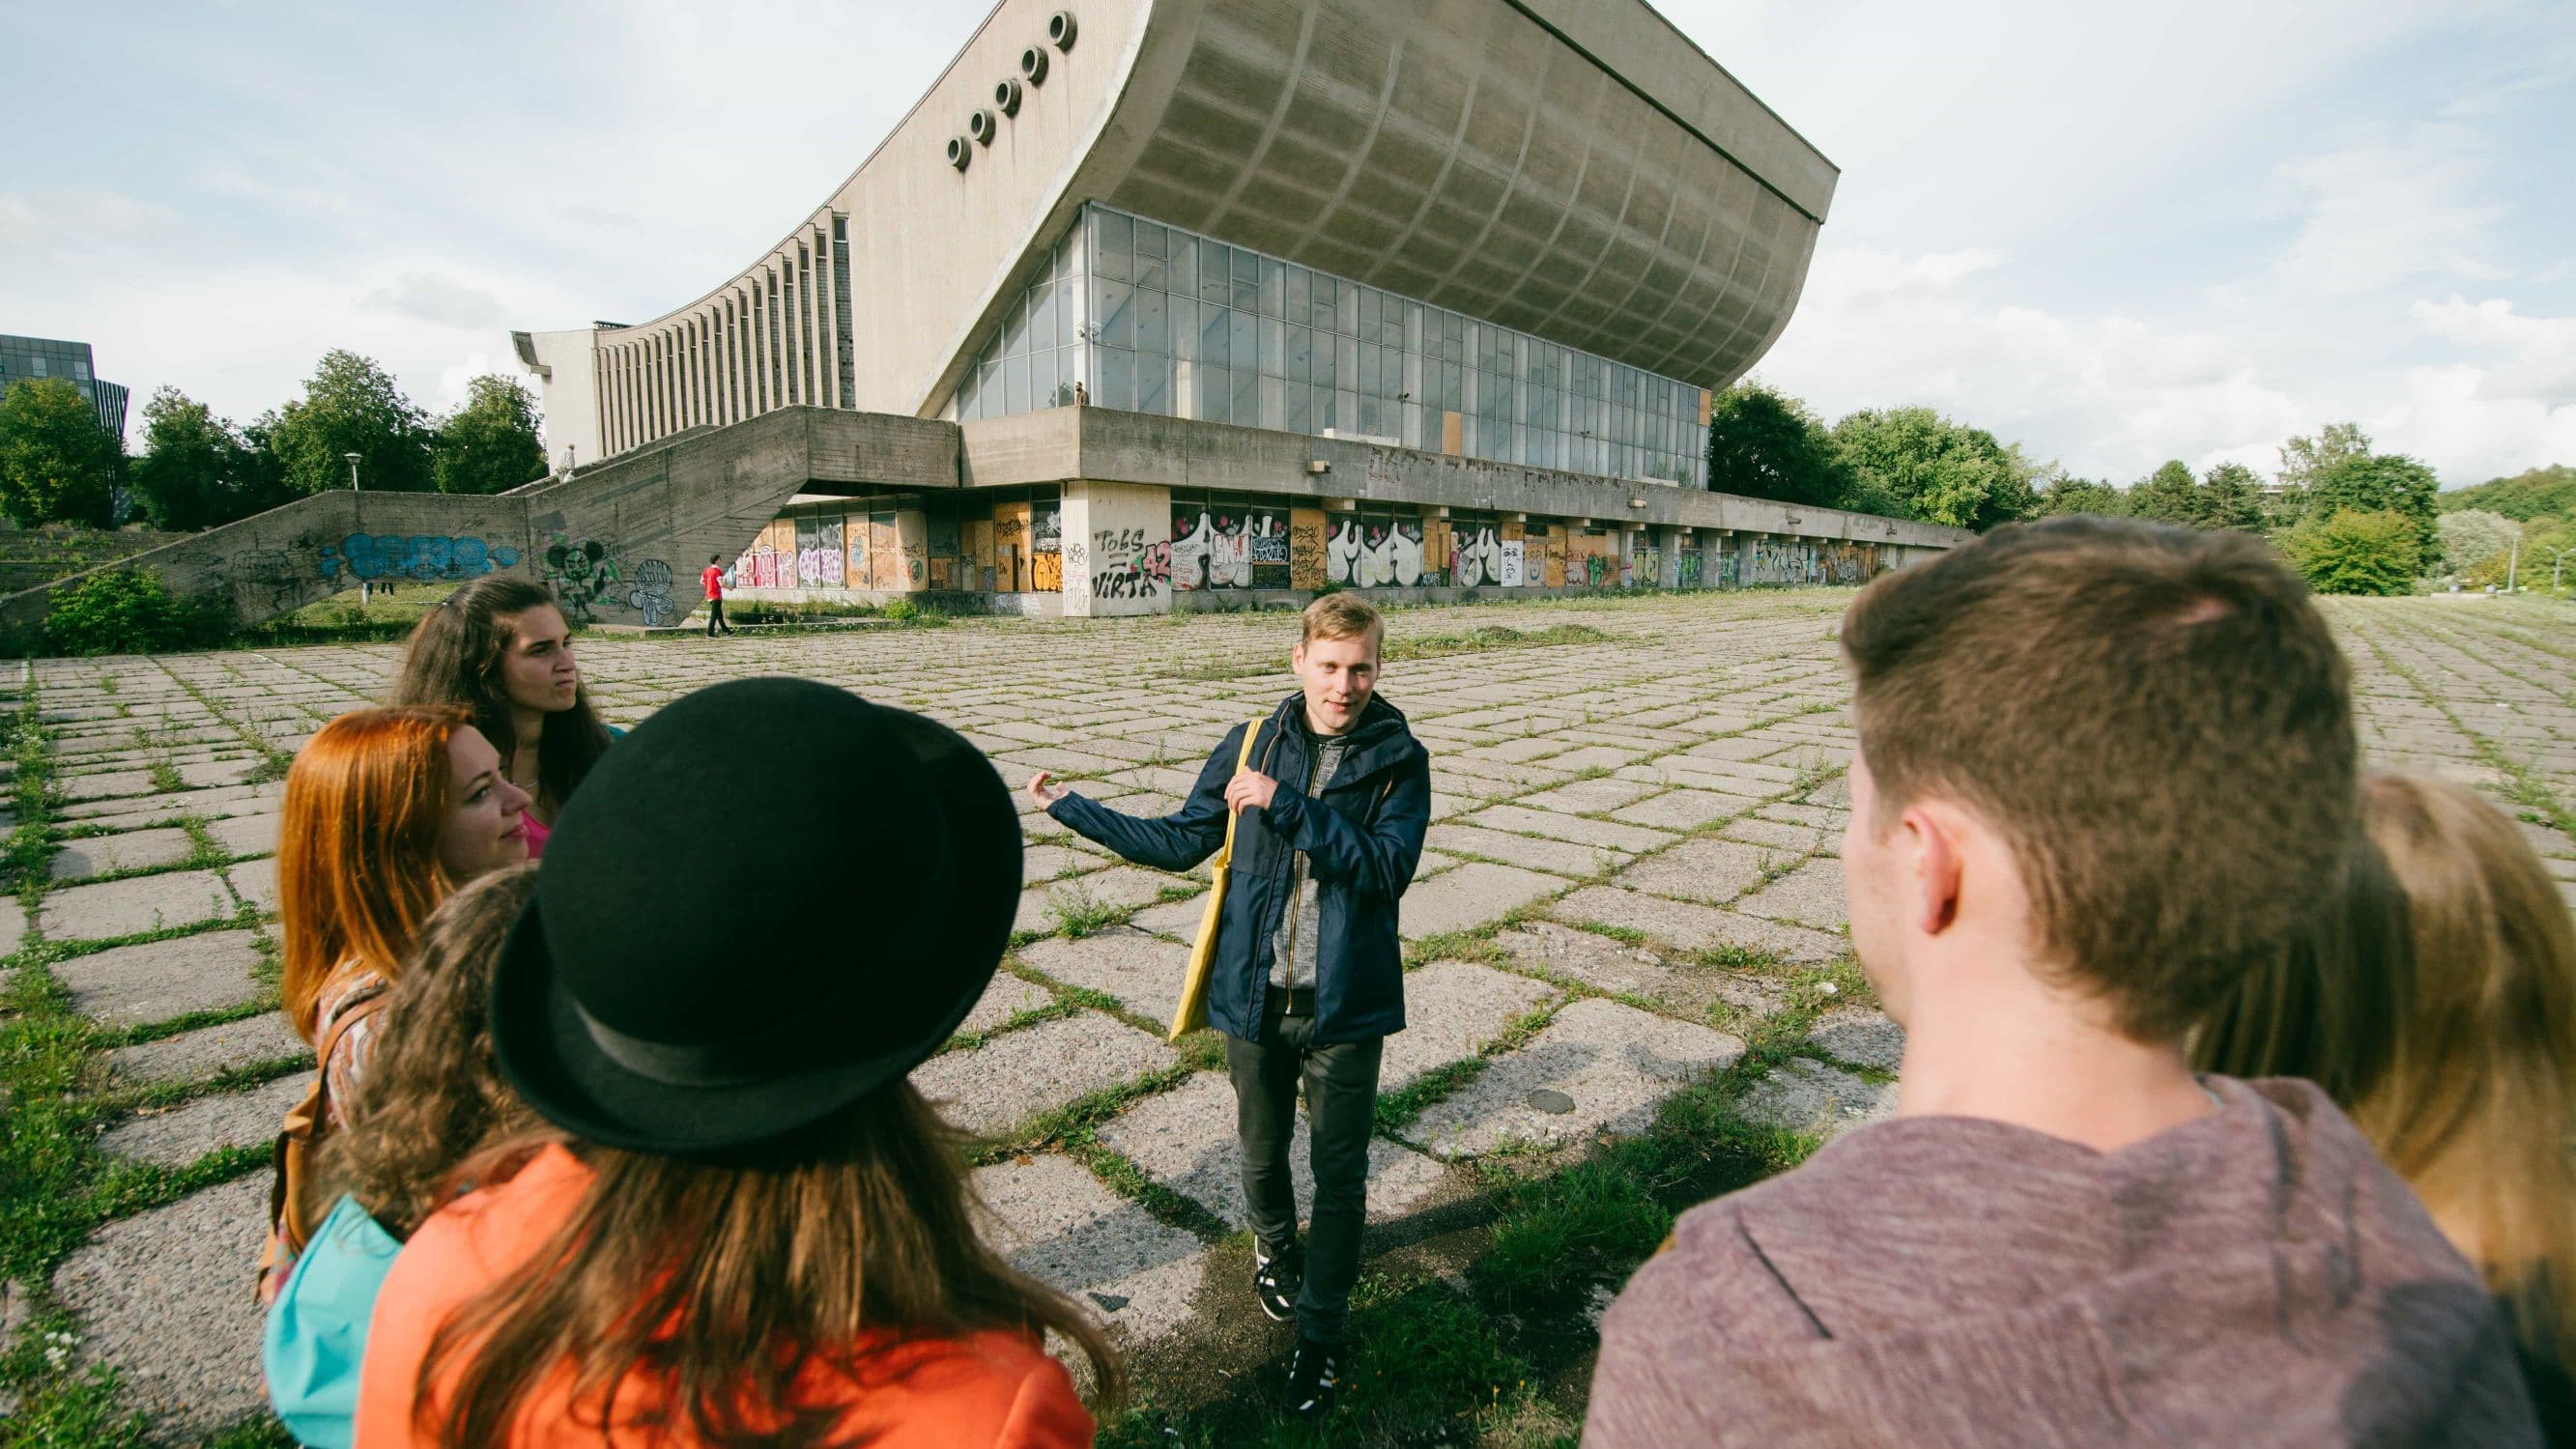 Palace of Concerts & Sports on Soviet Vilnius tour